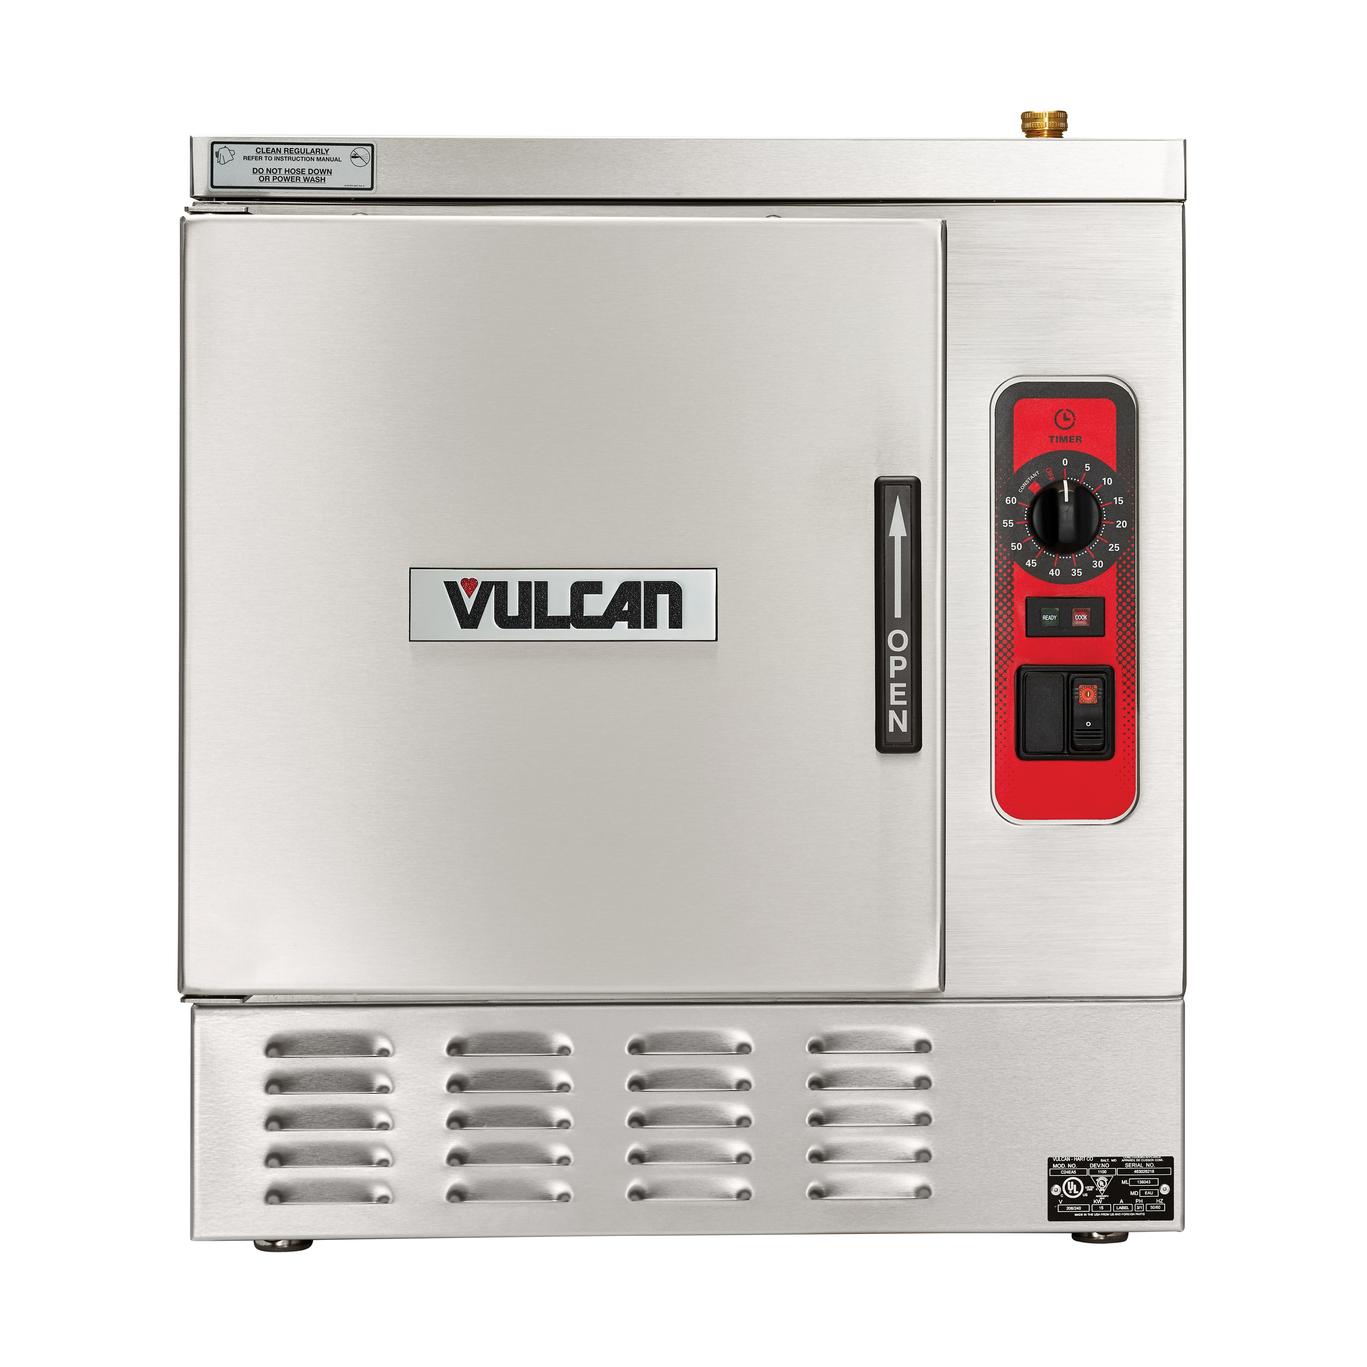 Vulcan C24EA5-PLUS - Item 200091